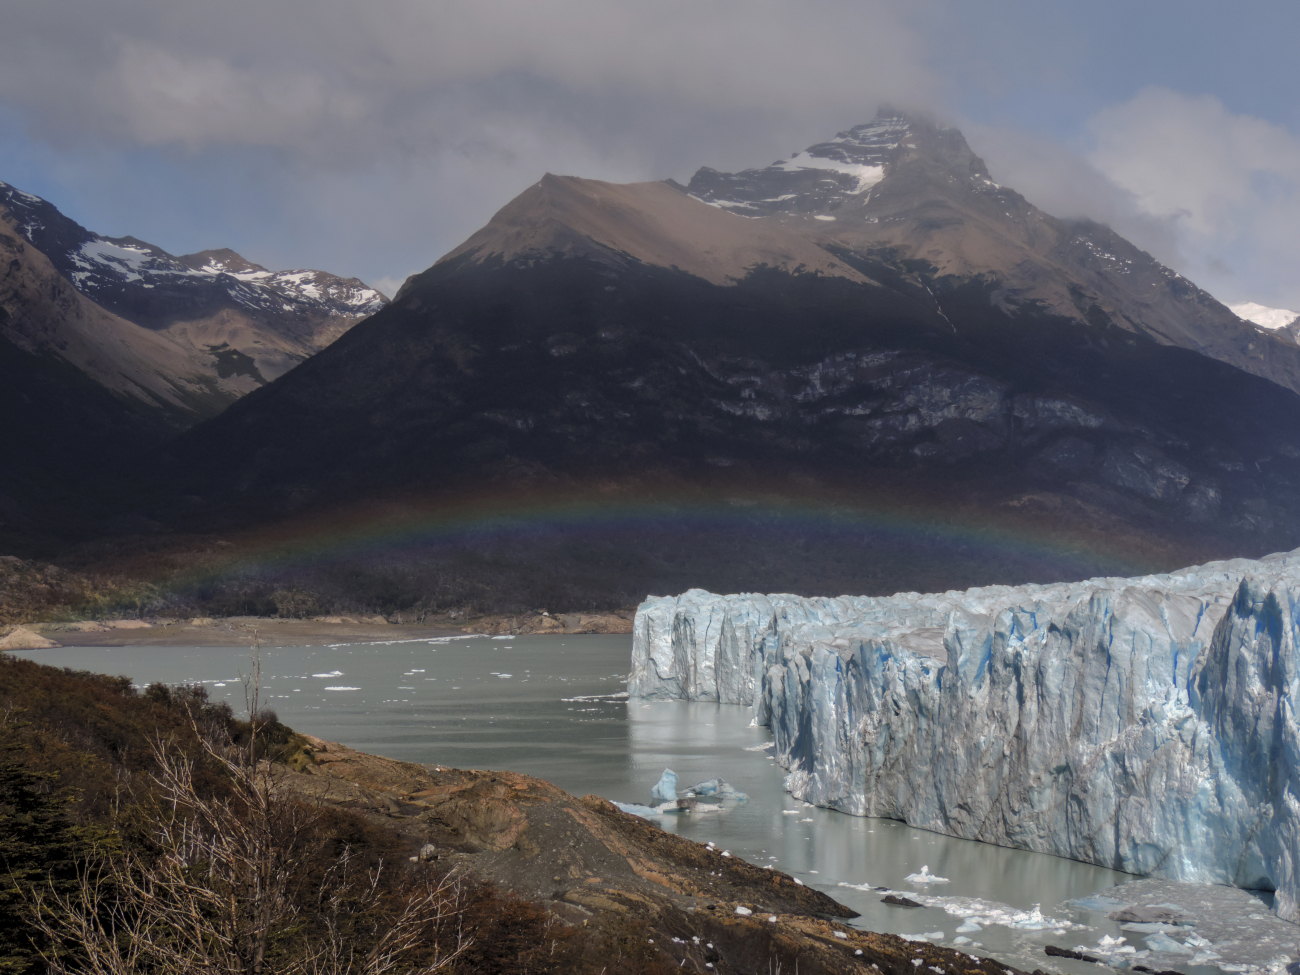 The Perito Moreno Glacier is a glacier located in the Los GlaciaresNational Park in southwest Santa Cruz Province, Argentina